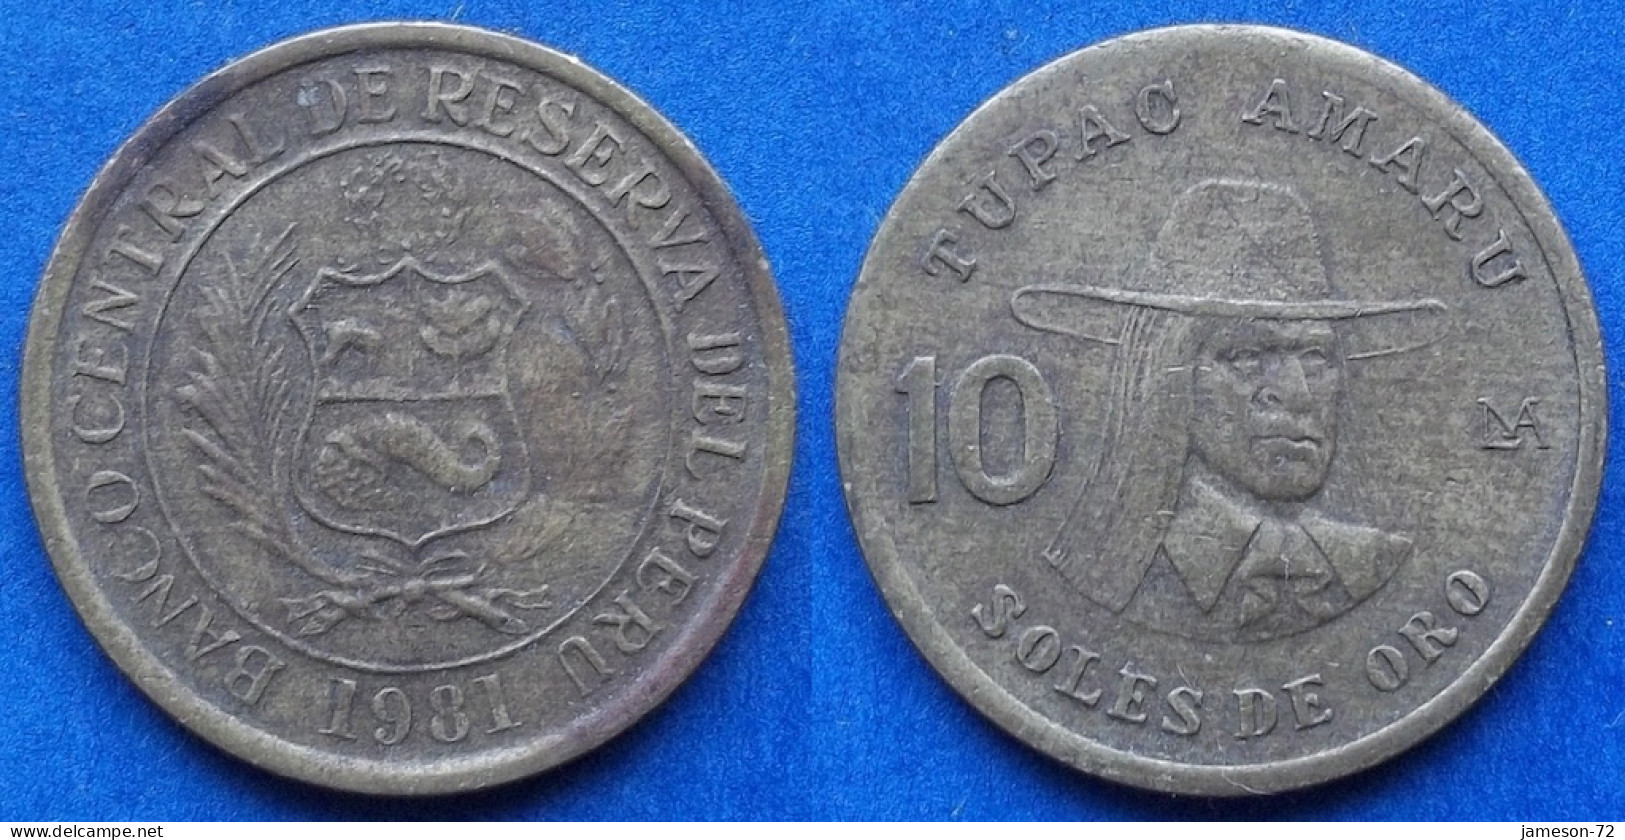 PERU - 10 Soles 1981 "Tupac Amaru" KM# 272.2 Decimal Coinage (1893-1986) - Edelweiss Coins - Pérou